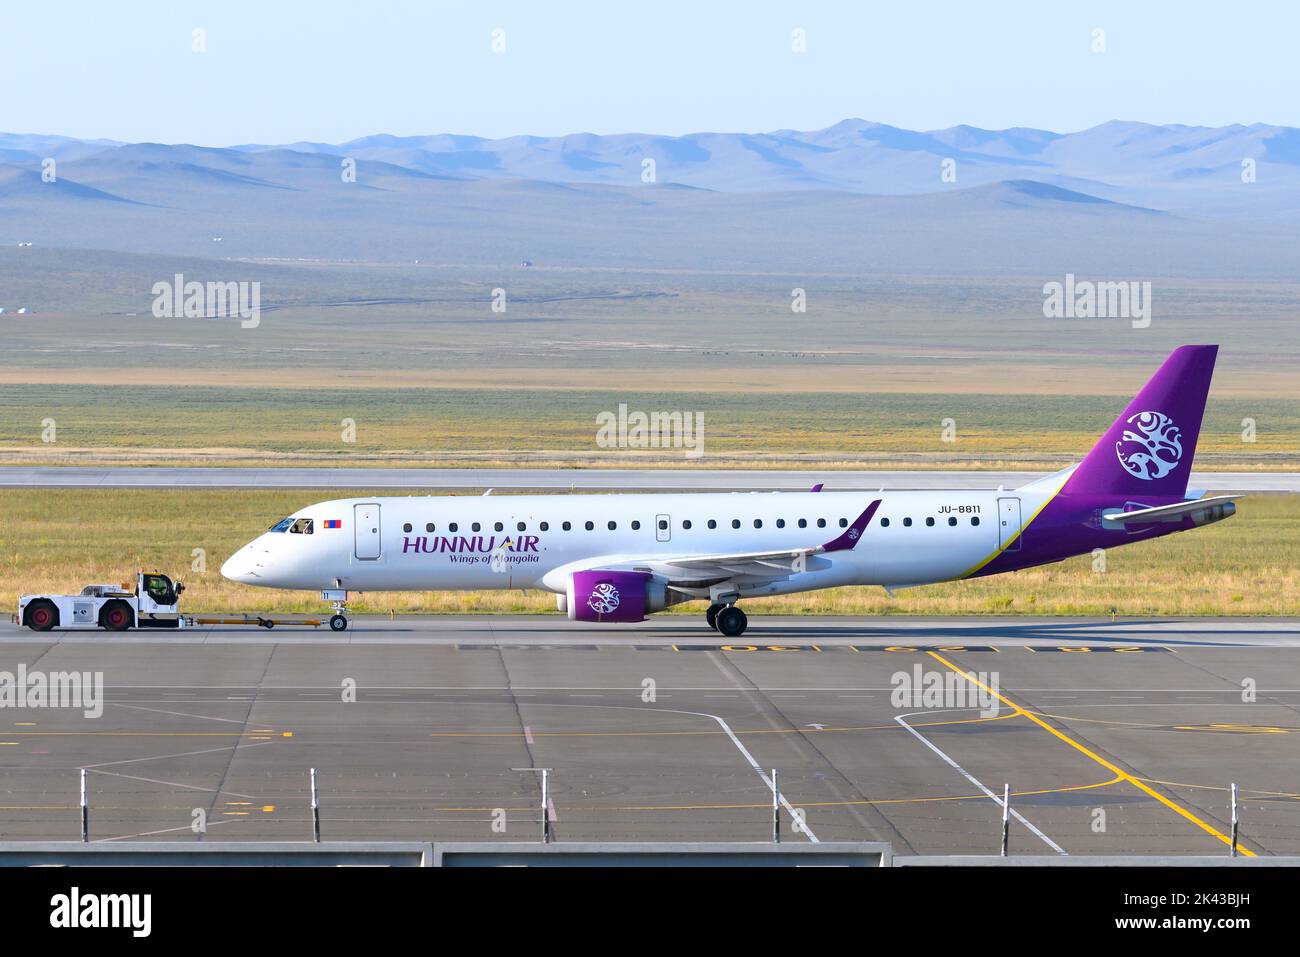 Hunnu Air Embraer E190 Flugzeuge auf dem neuen Flughafen Ulaanbaatar in der Mongolei. Hunnu Air ist eine mongolische Fluggesellschaft. Flugzeug ERJ 190 von Hunnu Air. Stockfoto